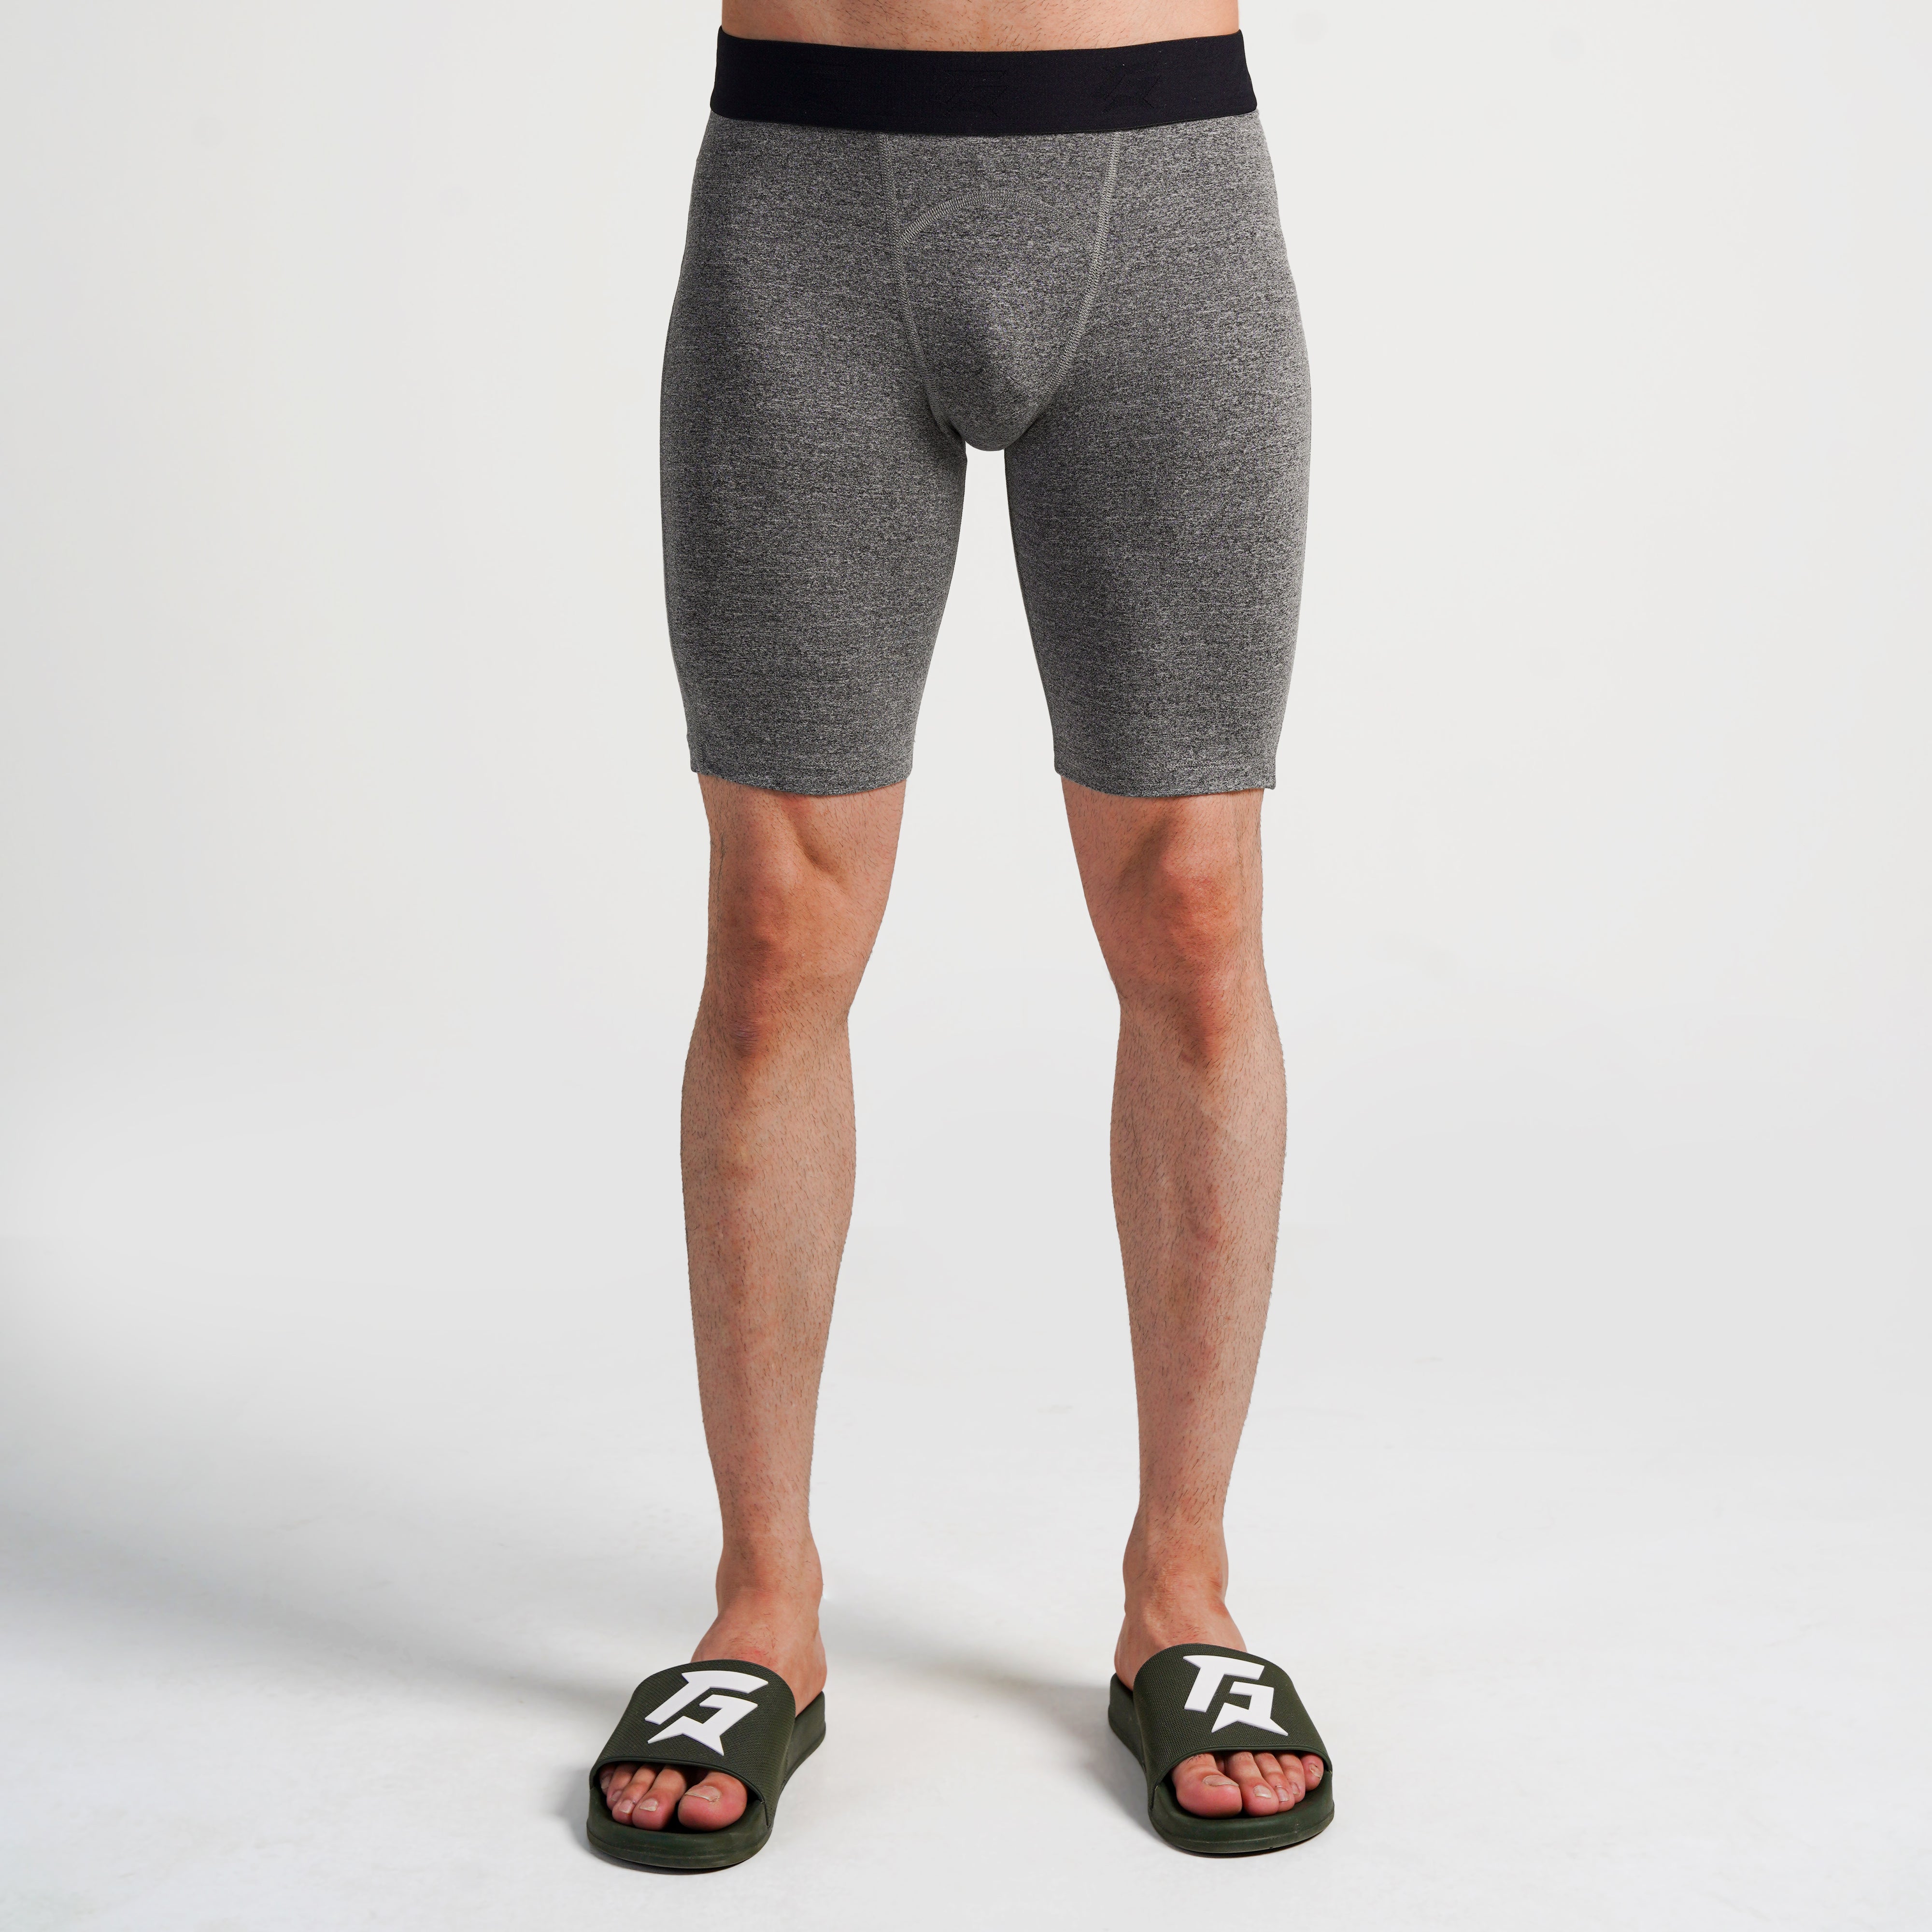 Elite Compression Shorts (Grey)